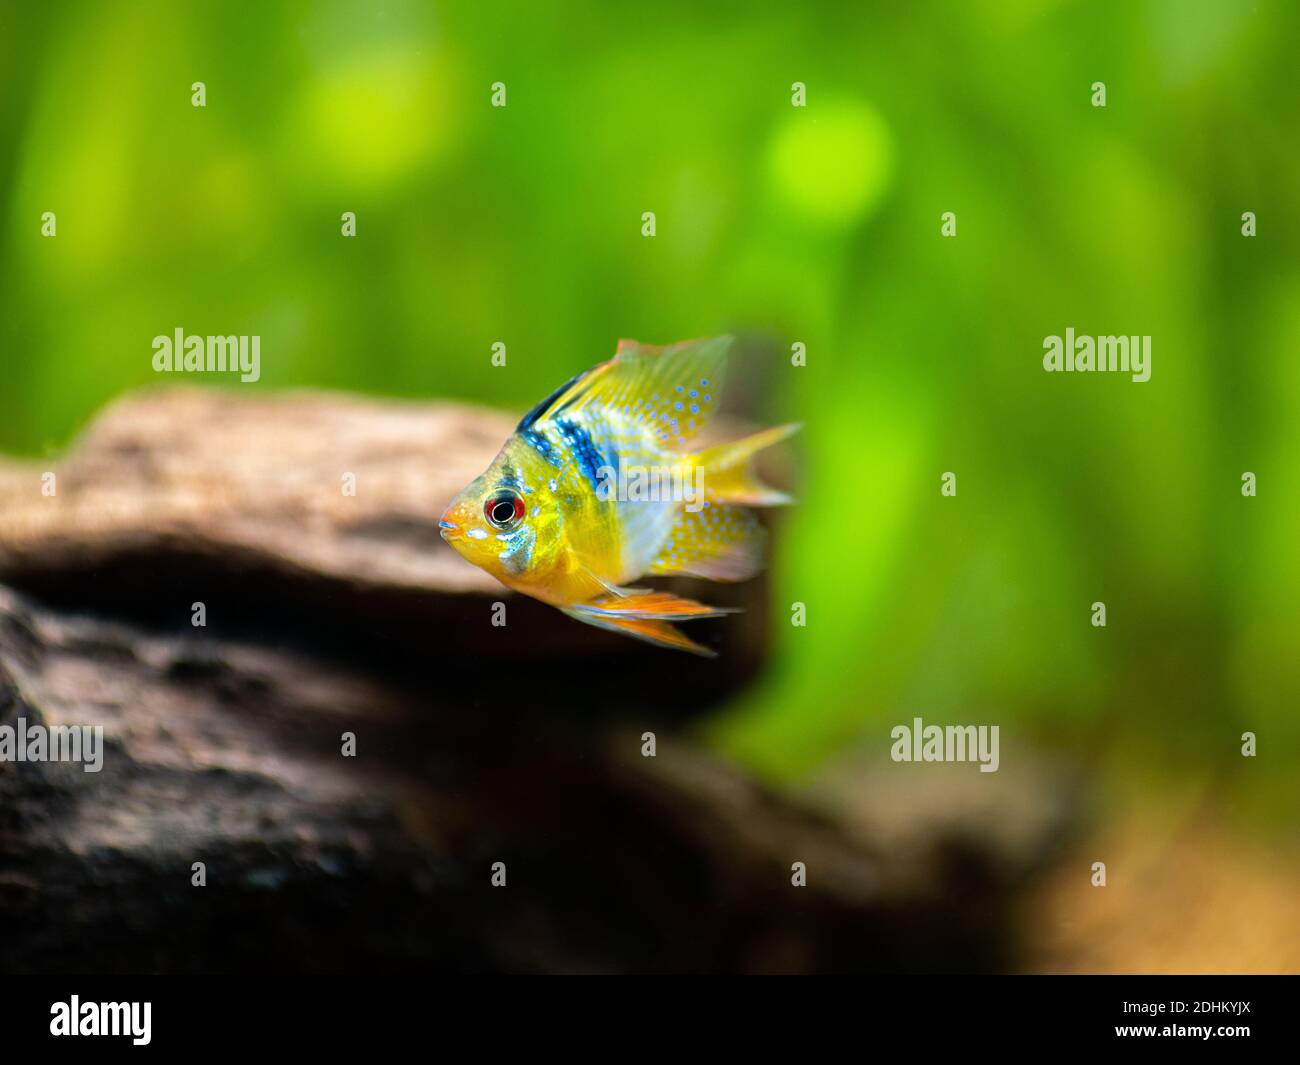 blue balloon ram (Microgeophagus ramirezi) isolated in a fish tank with blurred background Stock Photo